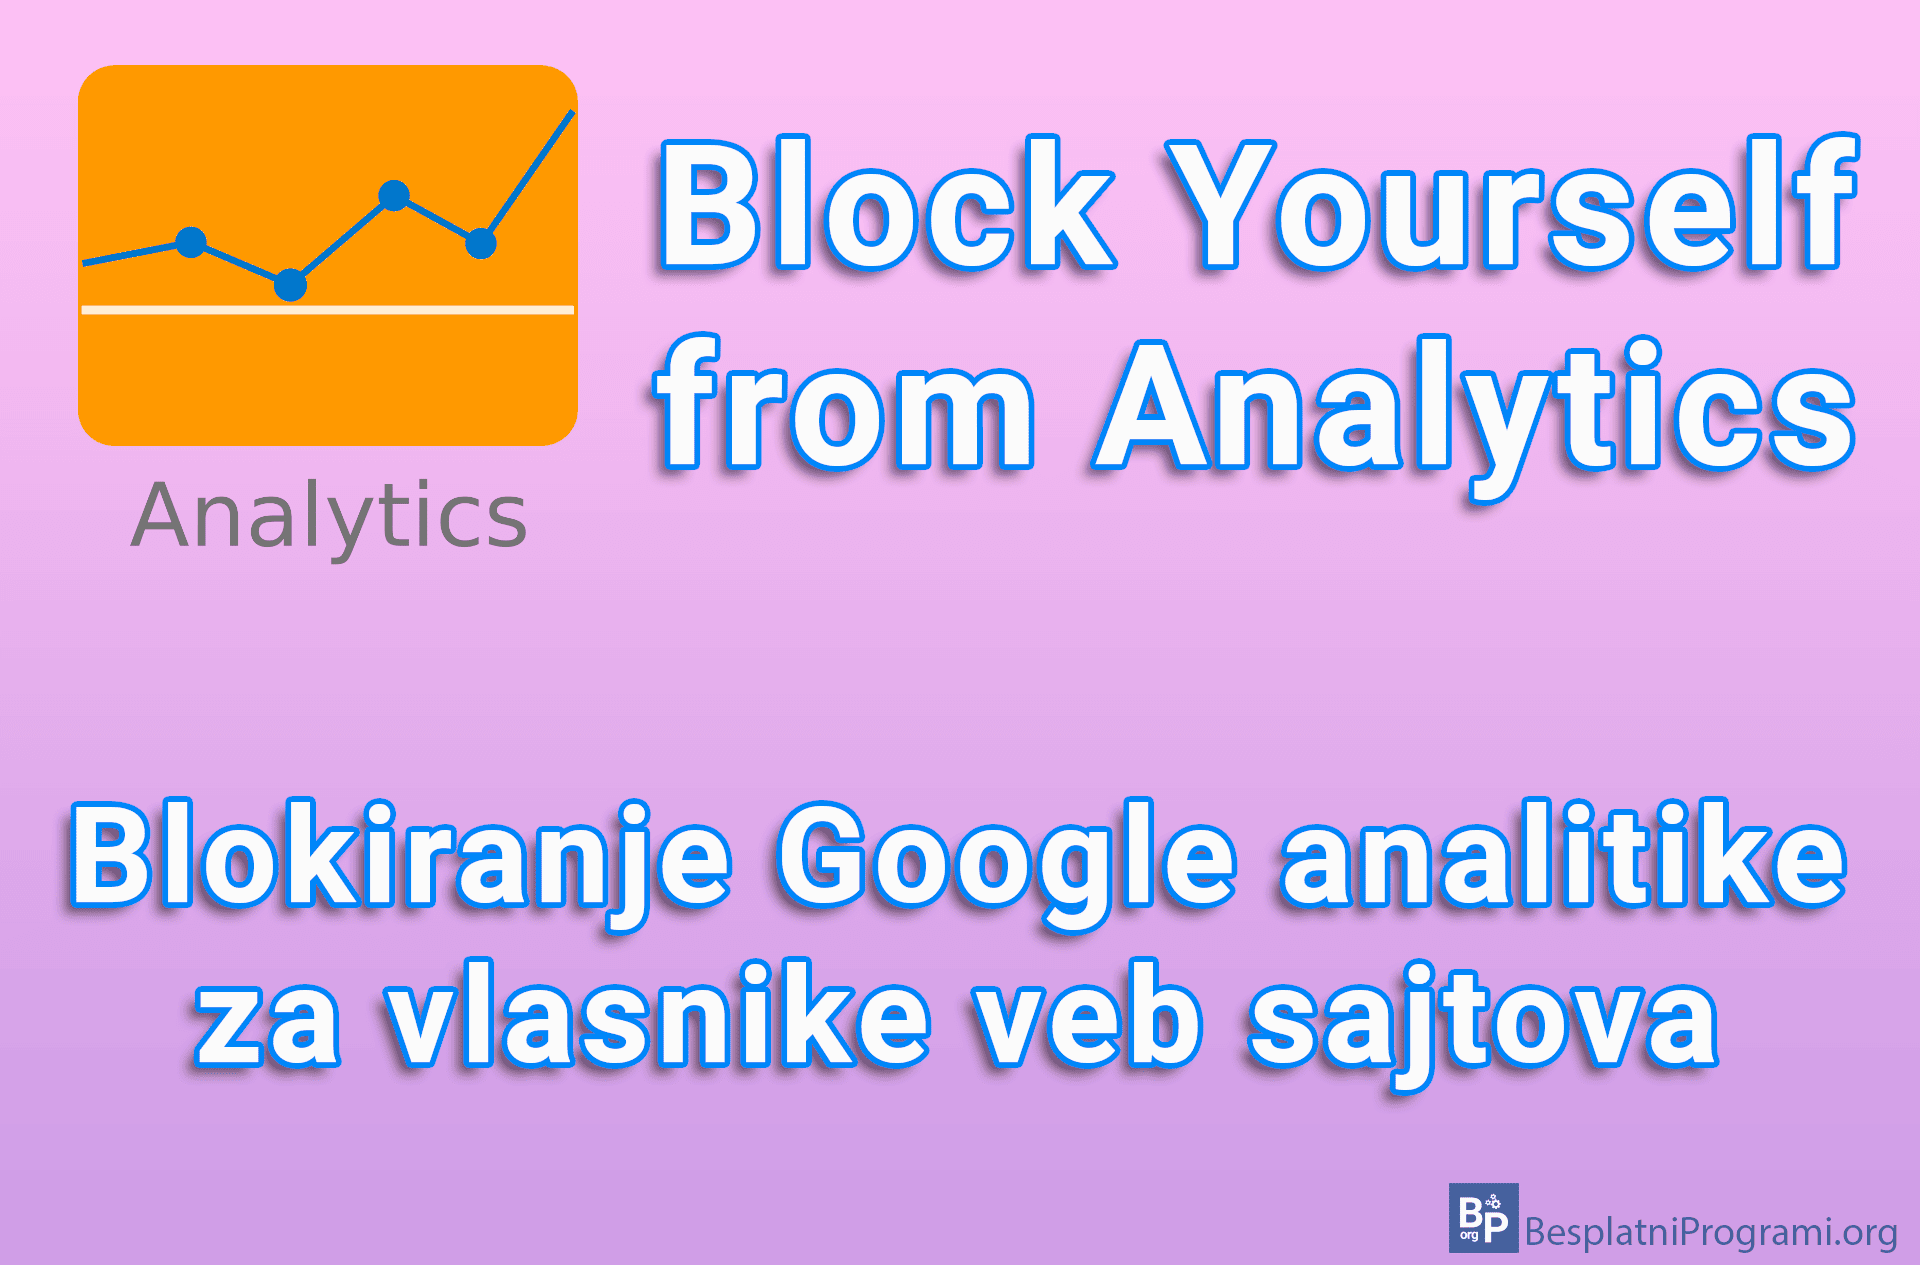 Block Yourself from Analytics - Blokiranje Google analitike za vlasnike veb sajtova